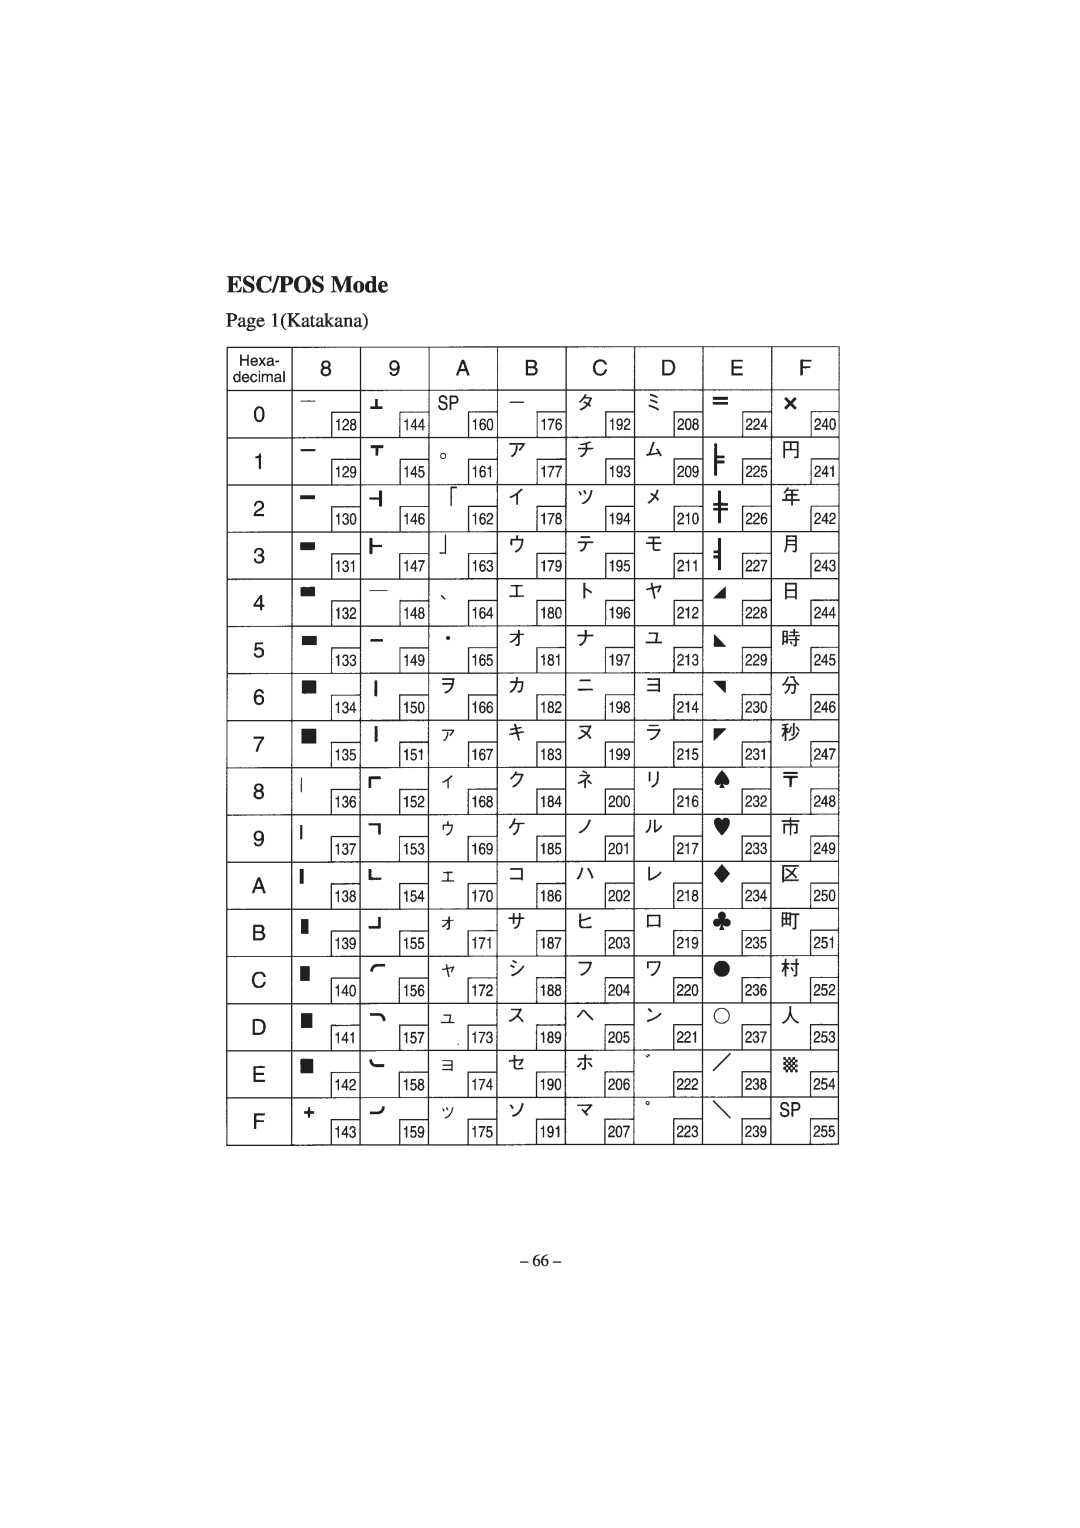 Star Micronics RS232 manual ESC/POS Mode, Page 1Katakana 